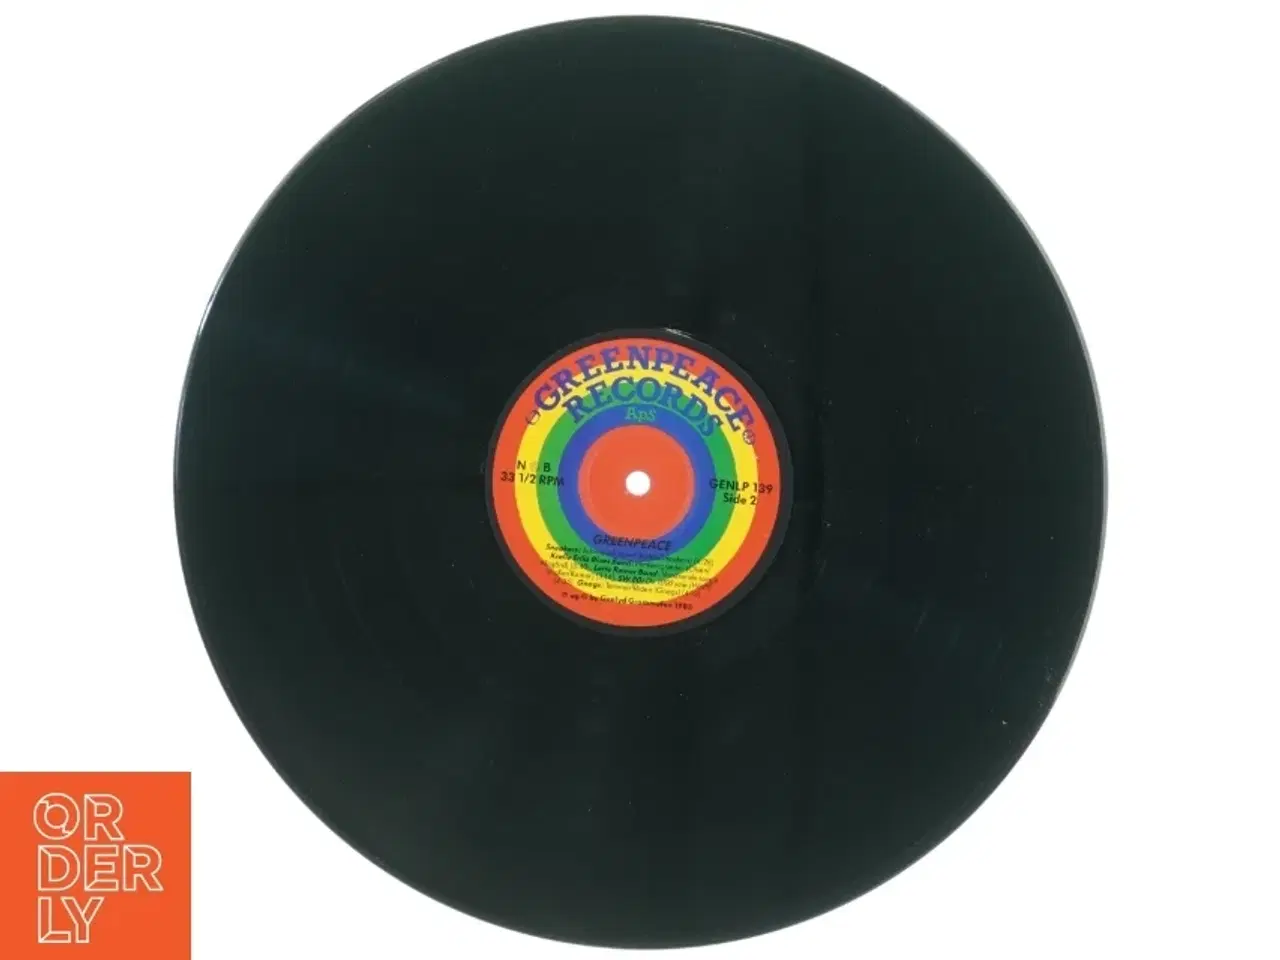 Billede 3 - Greenpeace vinylplade fra Greenpeace Records (str. 31 x 31 cm)